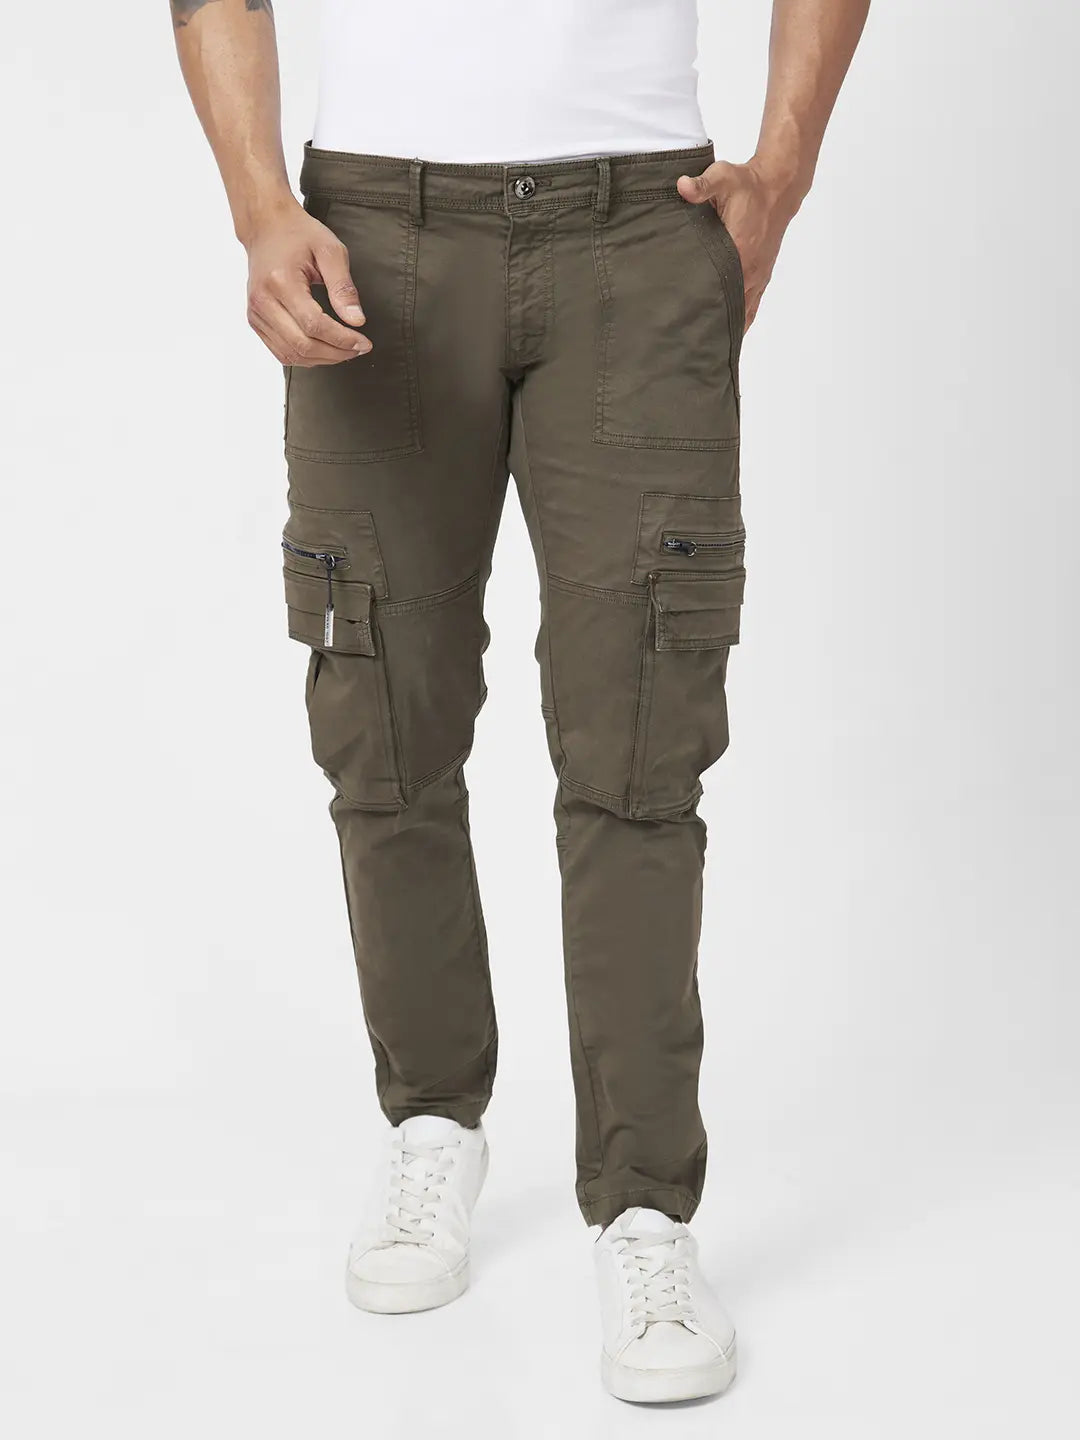 Buy Spykar Men's Cargo Solid Sand Khaki Trousers (Size:  28)-V05-01BB-054-Sand Khaki at Amazon.in